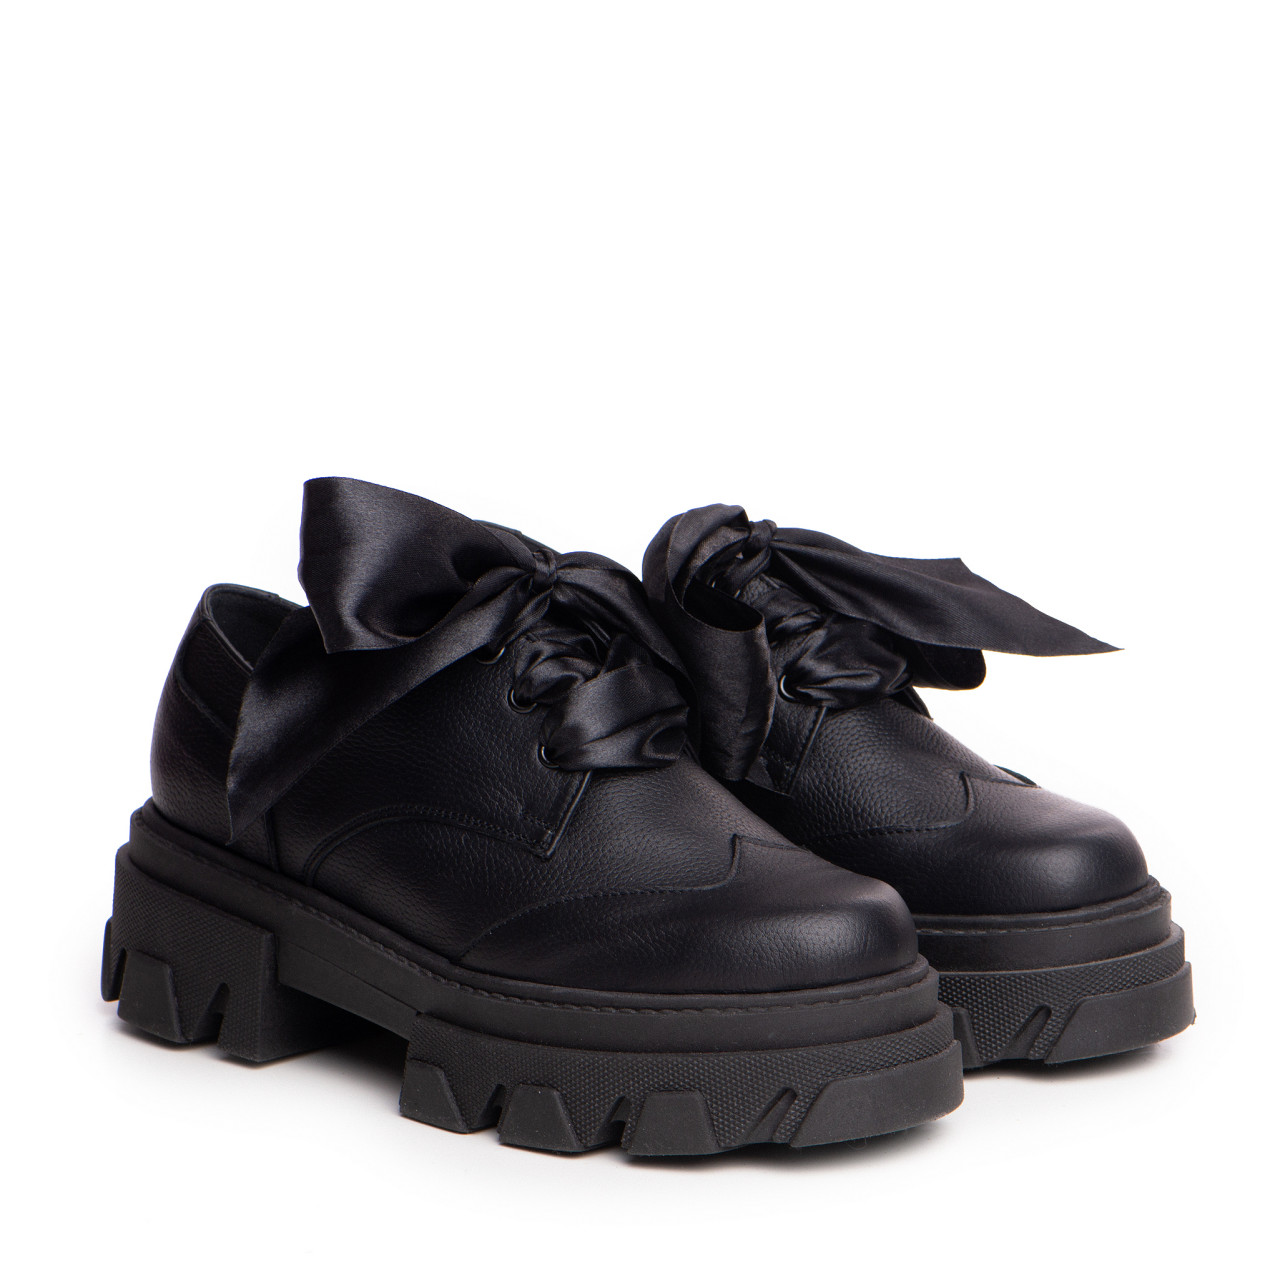 Pantofi Casual Esra din piele naturala negra cu textura bizonata